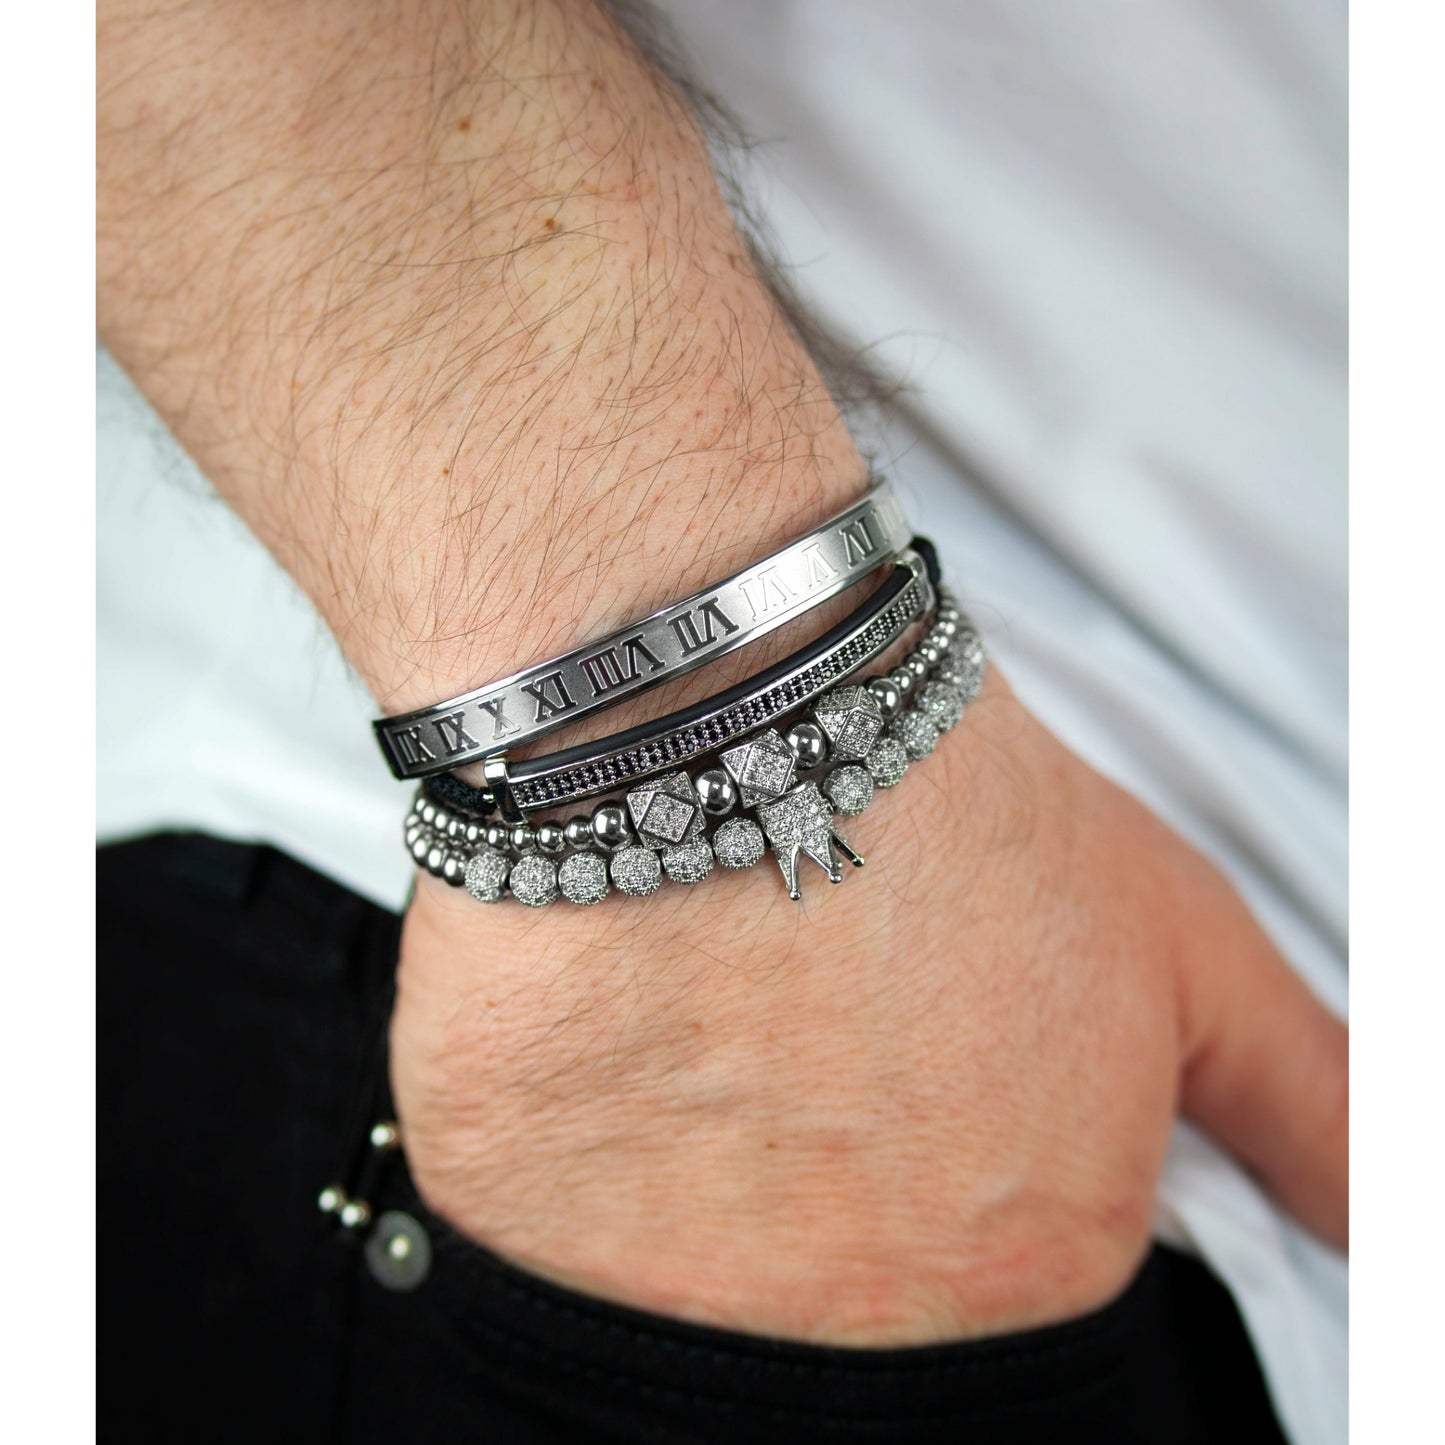 Imperial Roman King Set in Silver on man's wrist